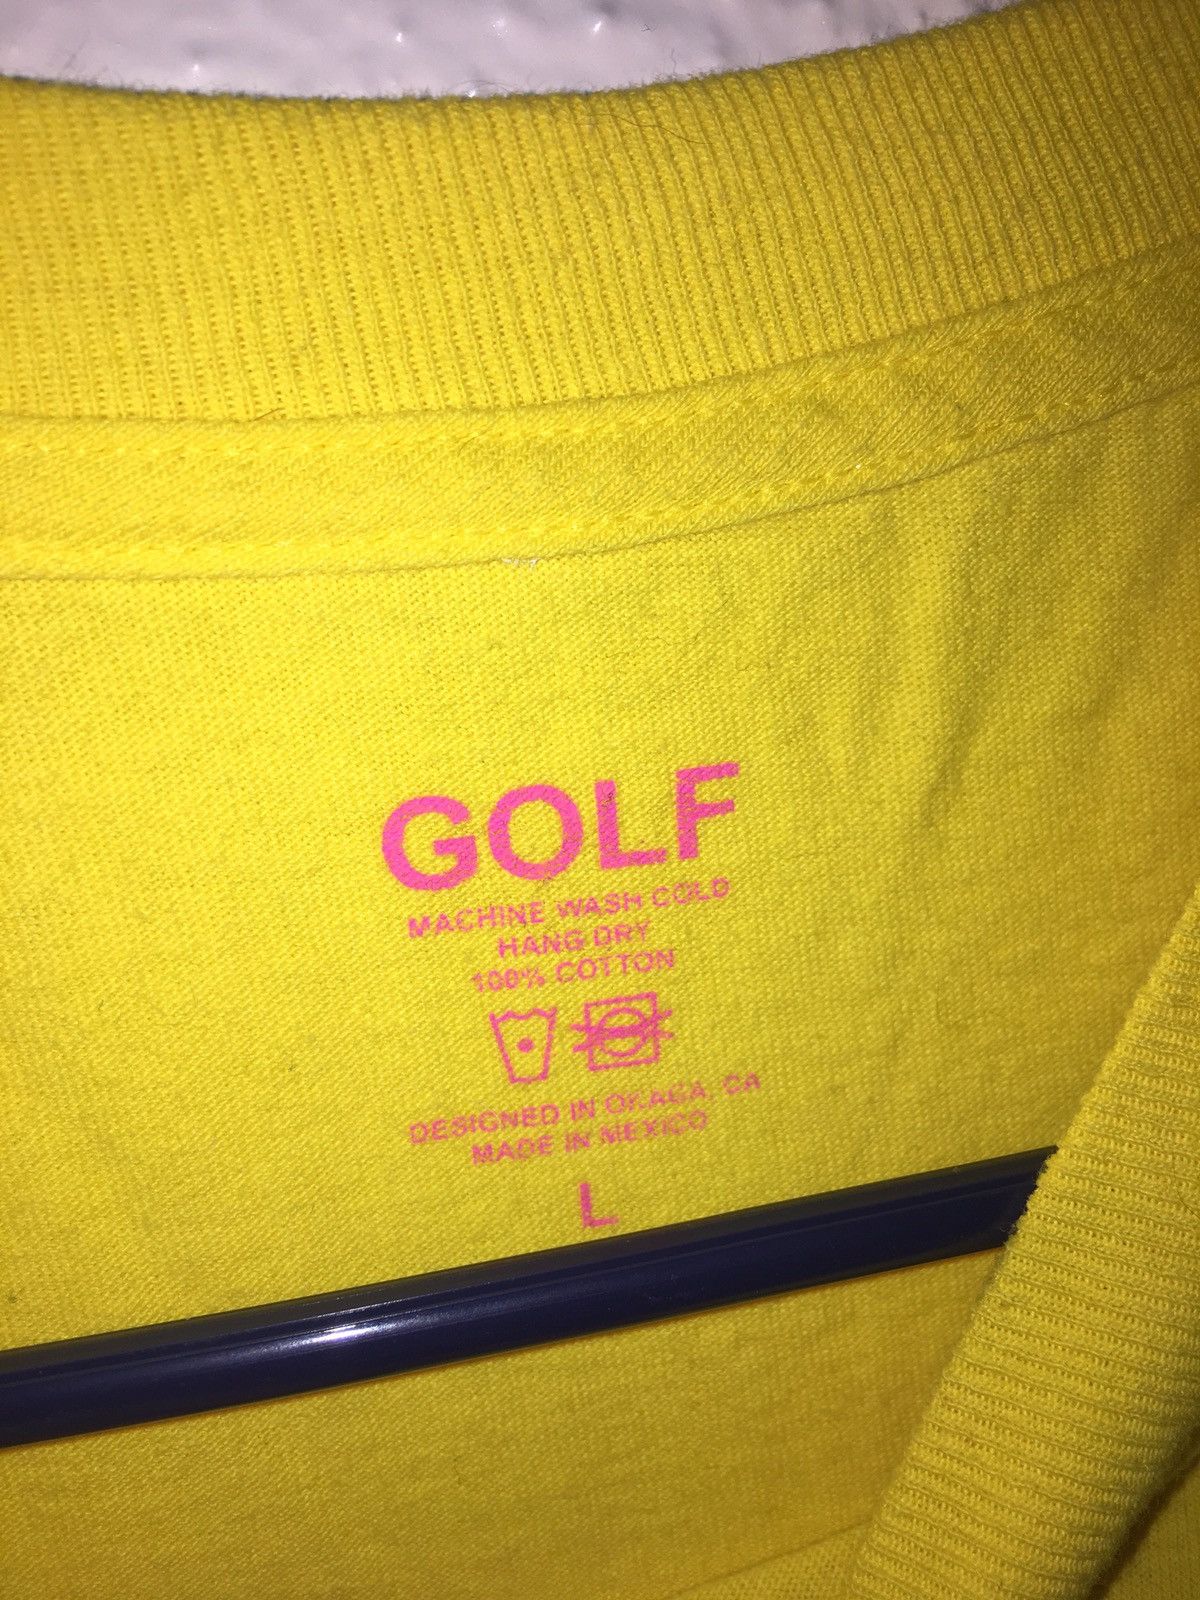 Golf Wang Golf Wang Cheetah Shirt Size US L / EU 52-54 / 3 - 3 Preview